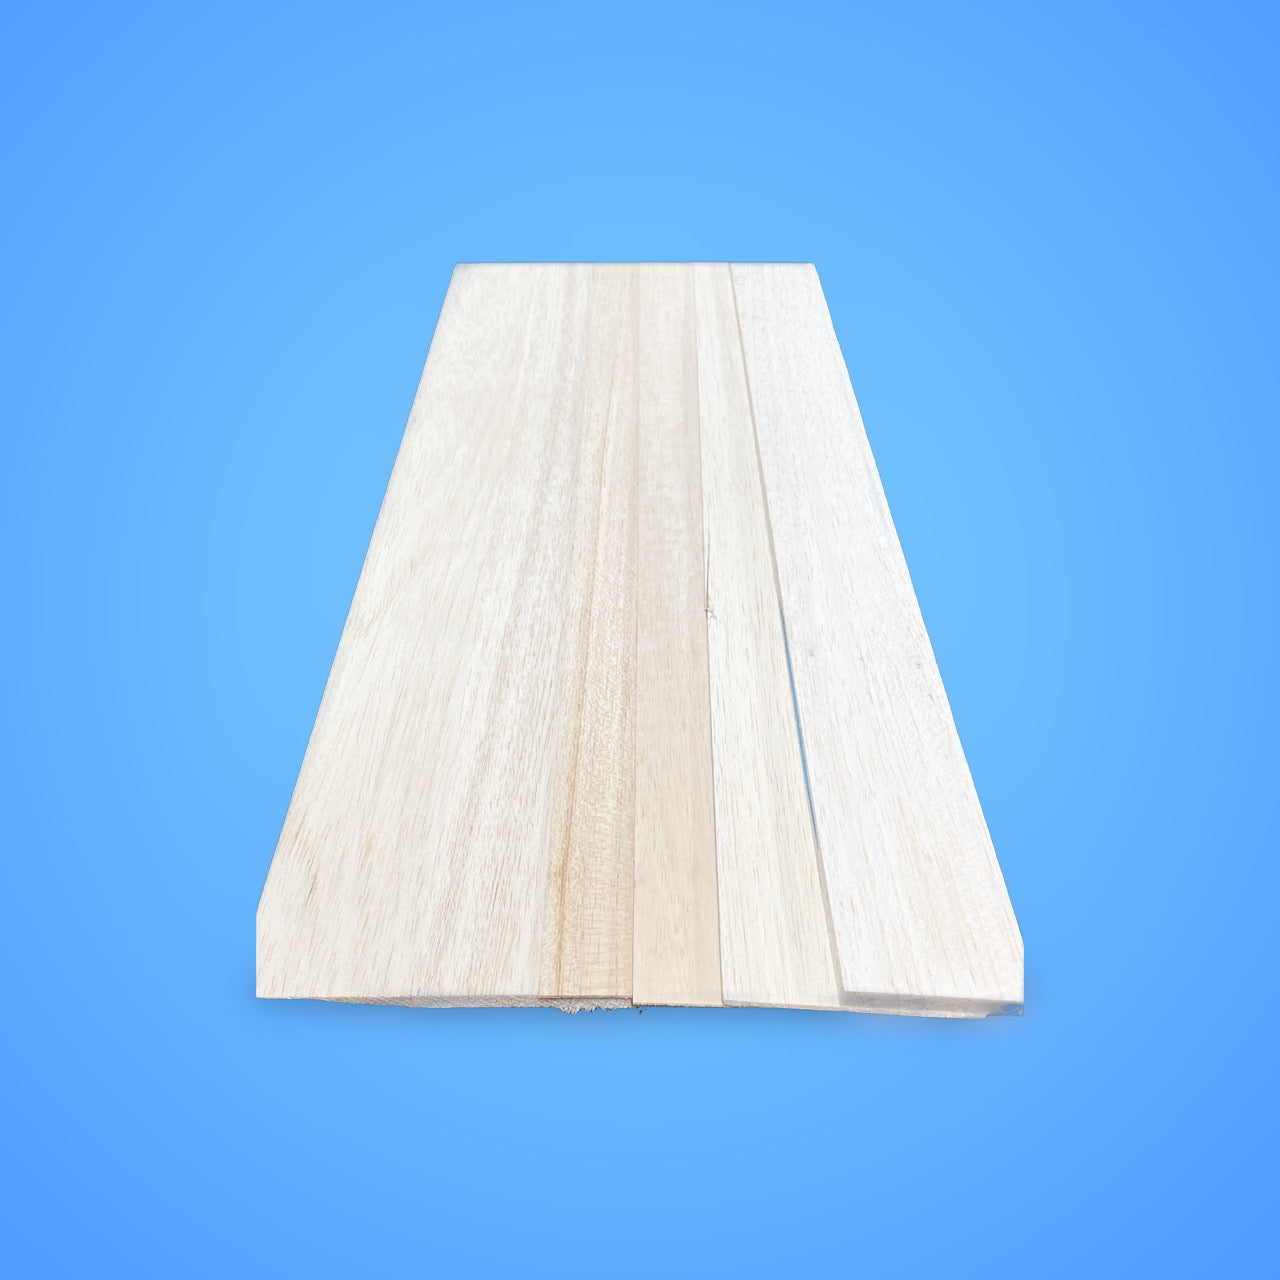 3/4 x 4 x 48 Aero Light Balsa Wood Sheets